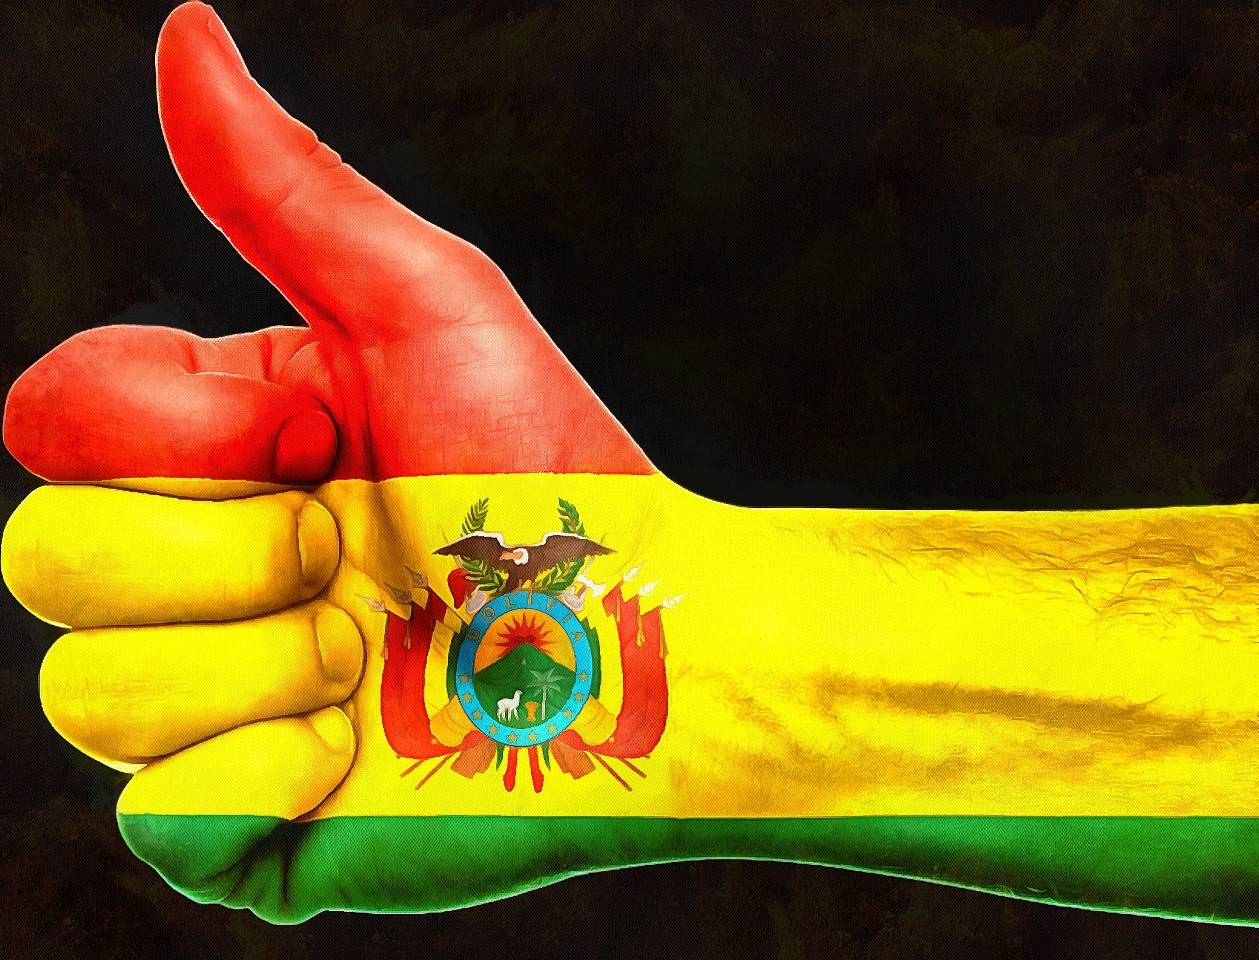 Bolivia - Free images about bolivia, bolivia free images, public domain images bolivia, free images bolivia!